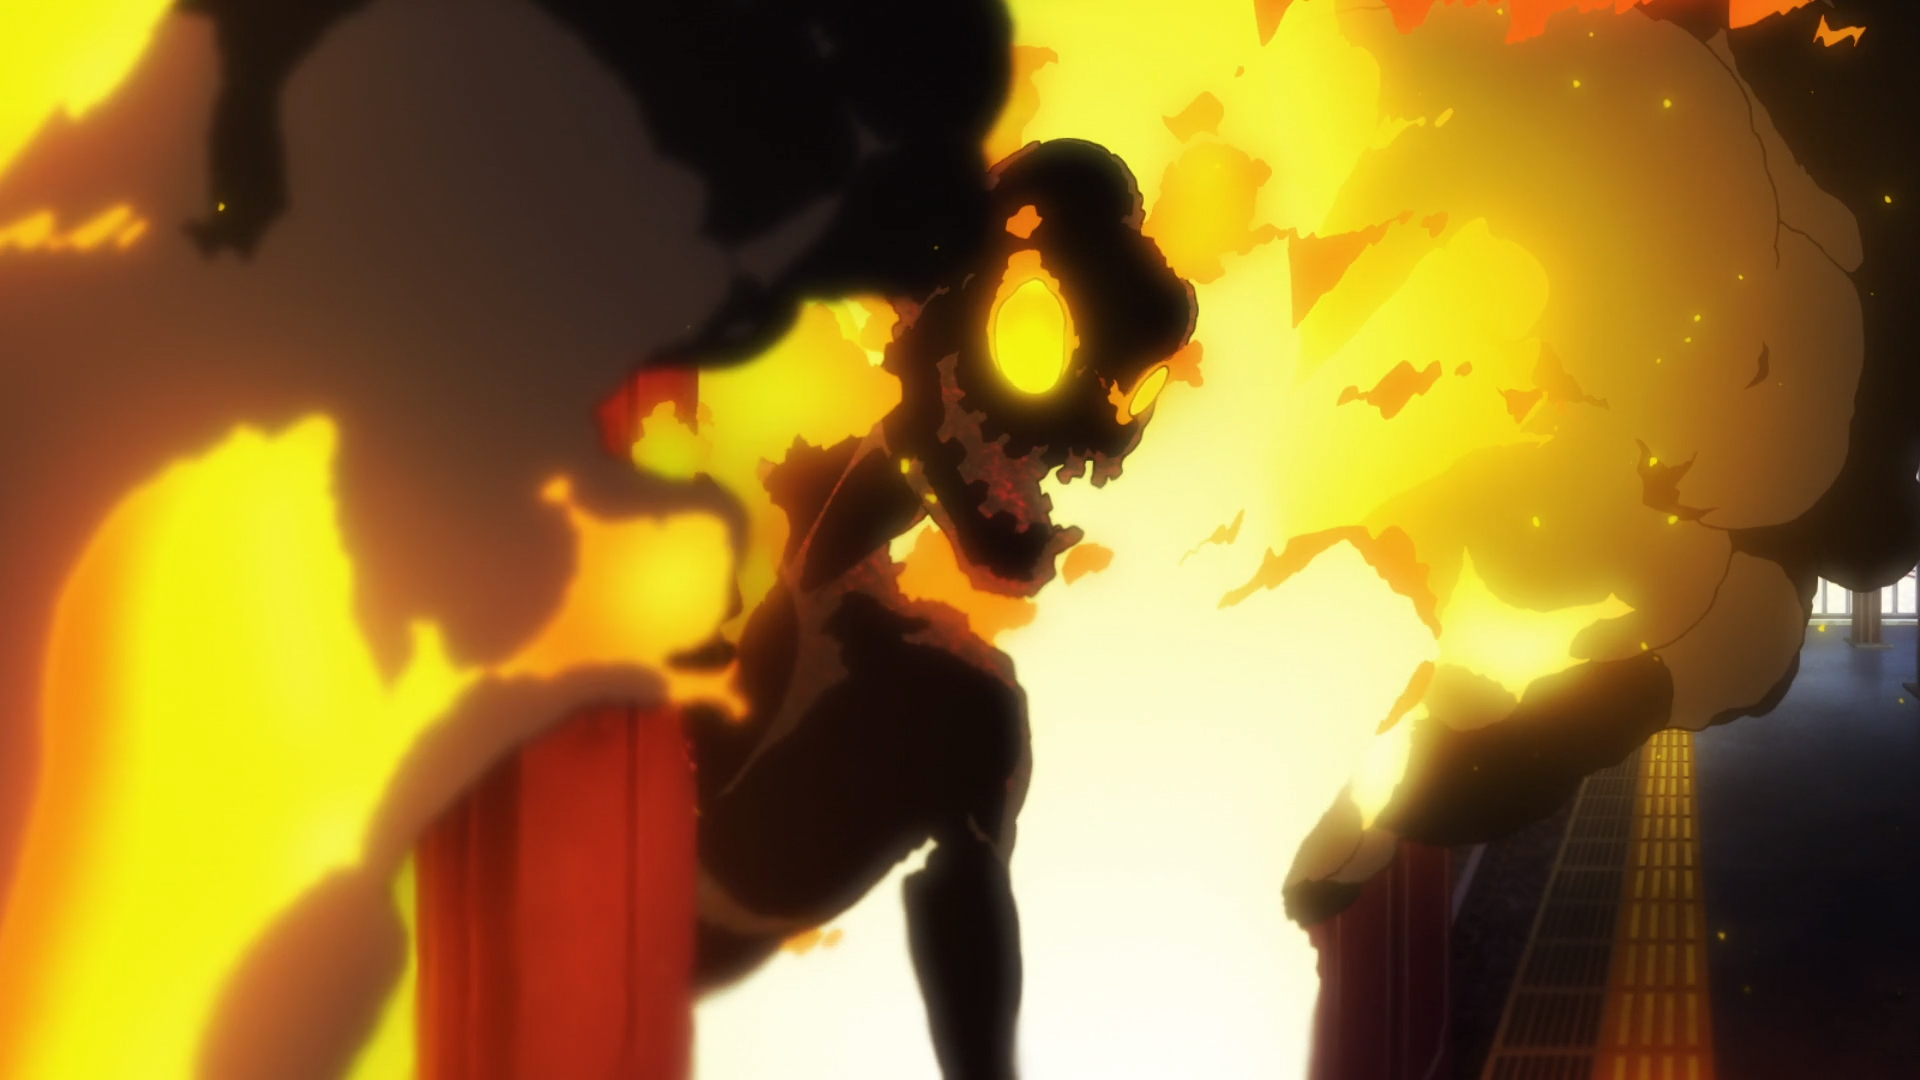 Fire force 🔥  Shinra kusakabe, Anime, Character design